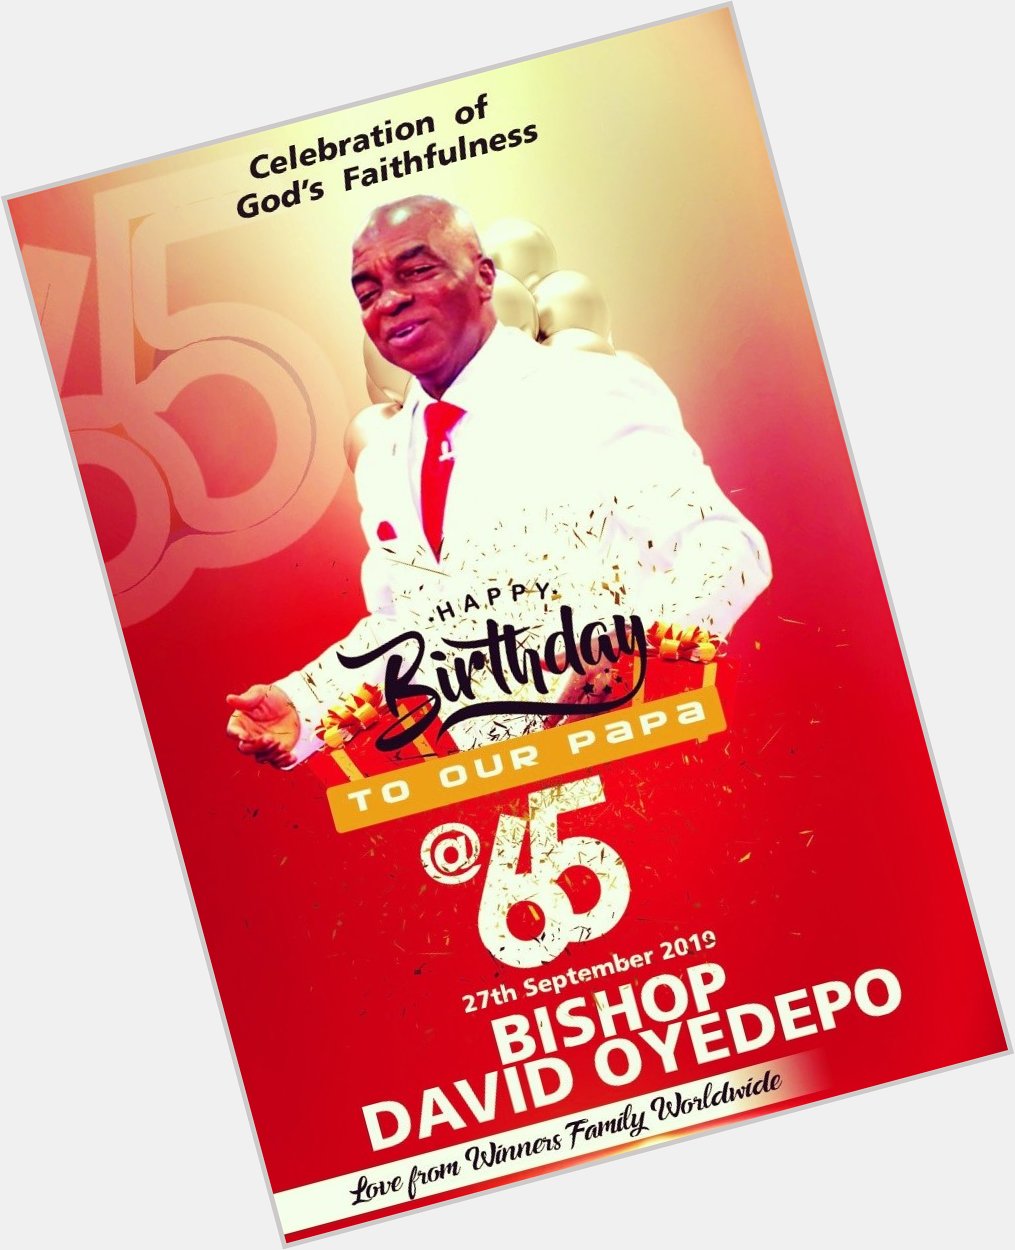 Happy Birthday Bishop David Oyedepo We celebrate the fulfillment of promises. 